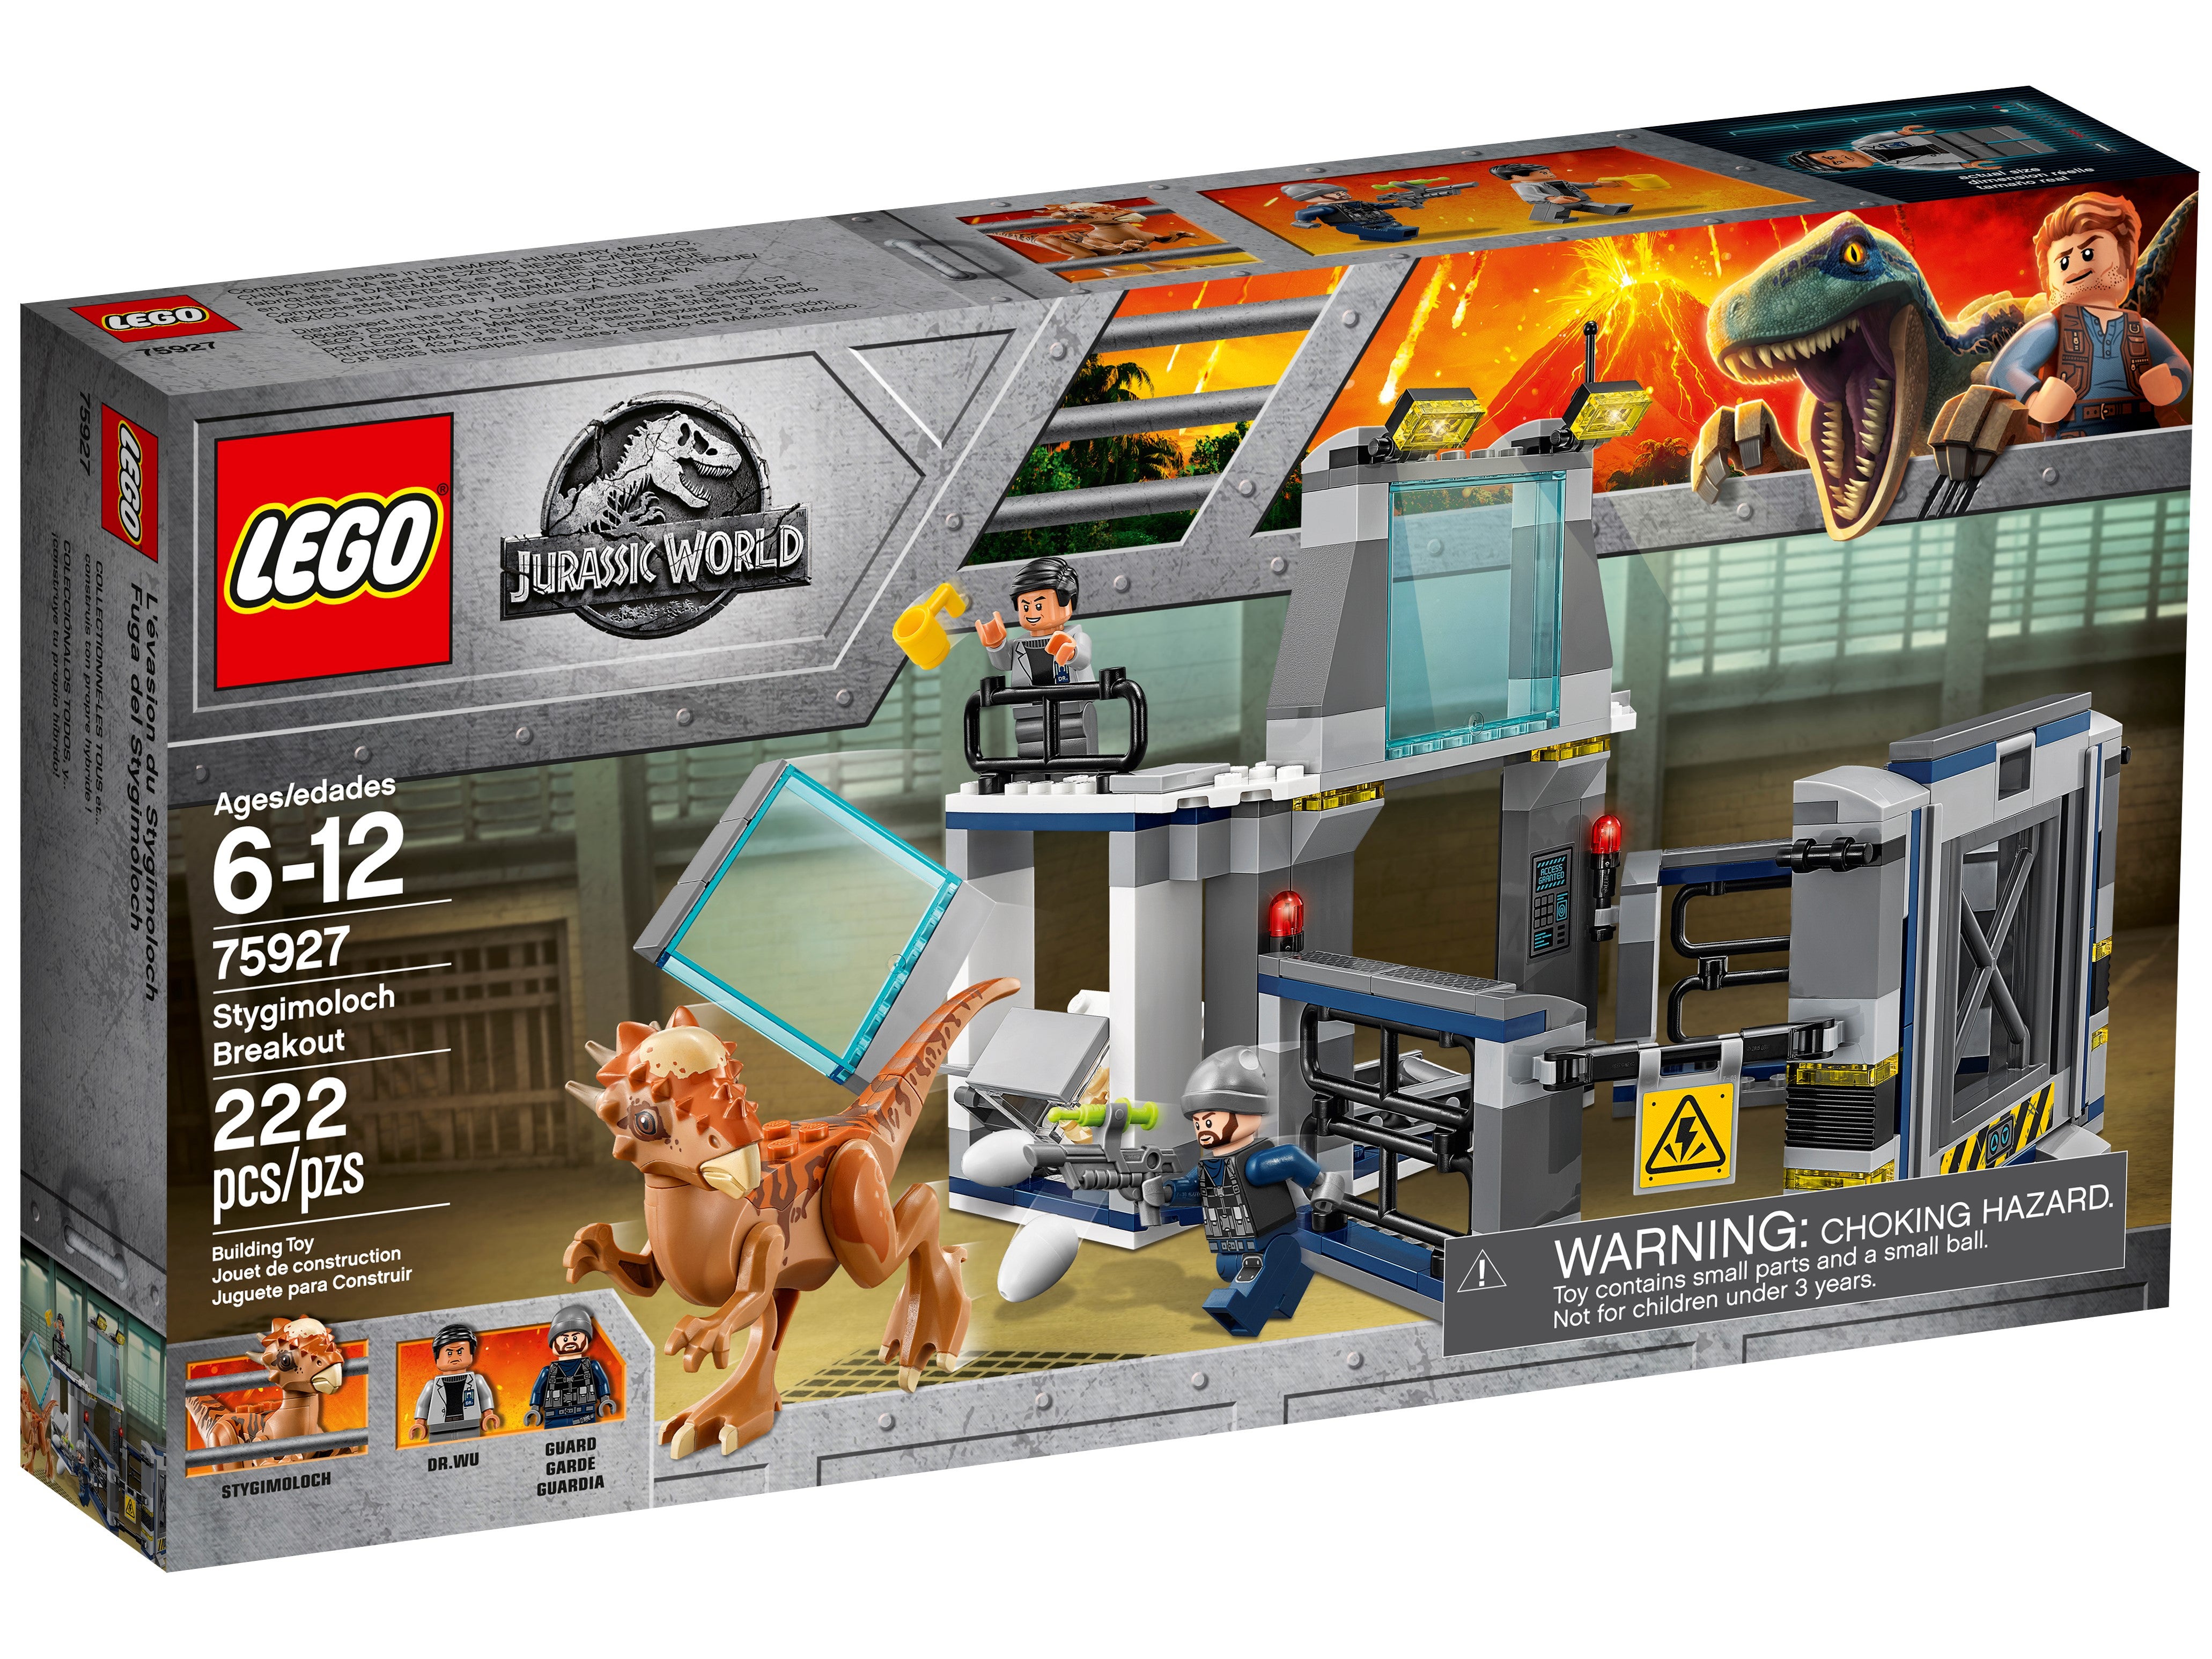 + Gun & Darts GUARD Authentic from LEGO Jurassic World Set #75927